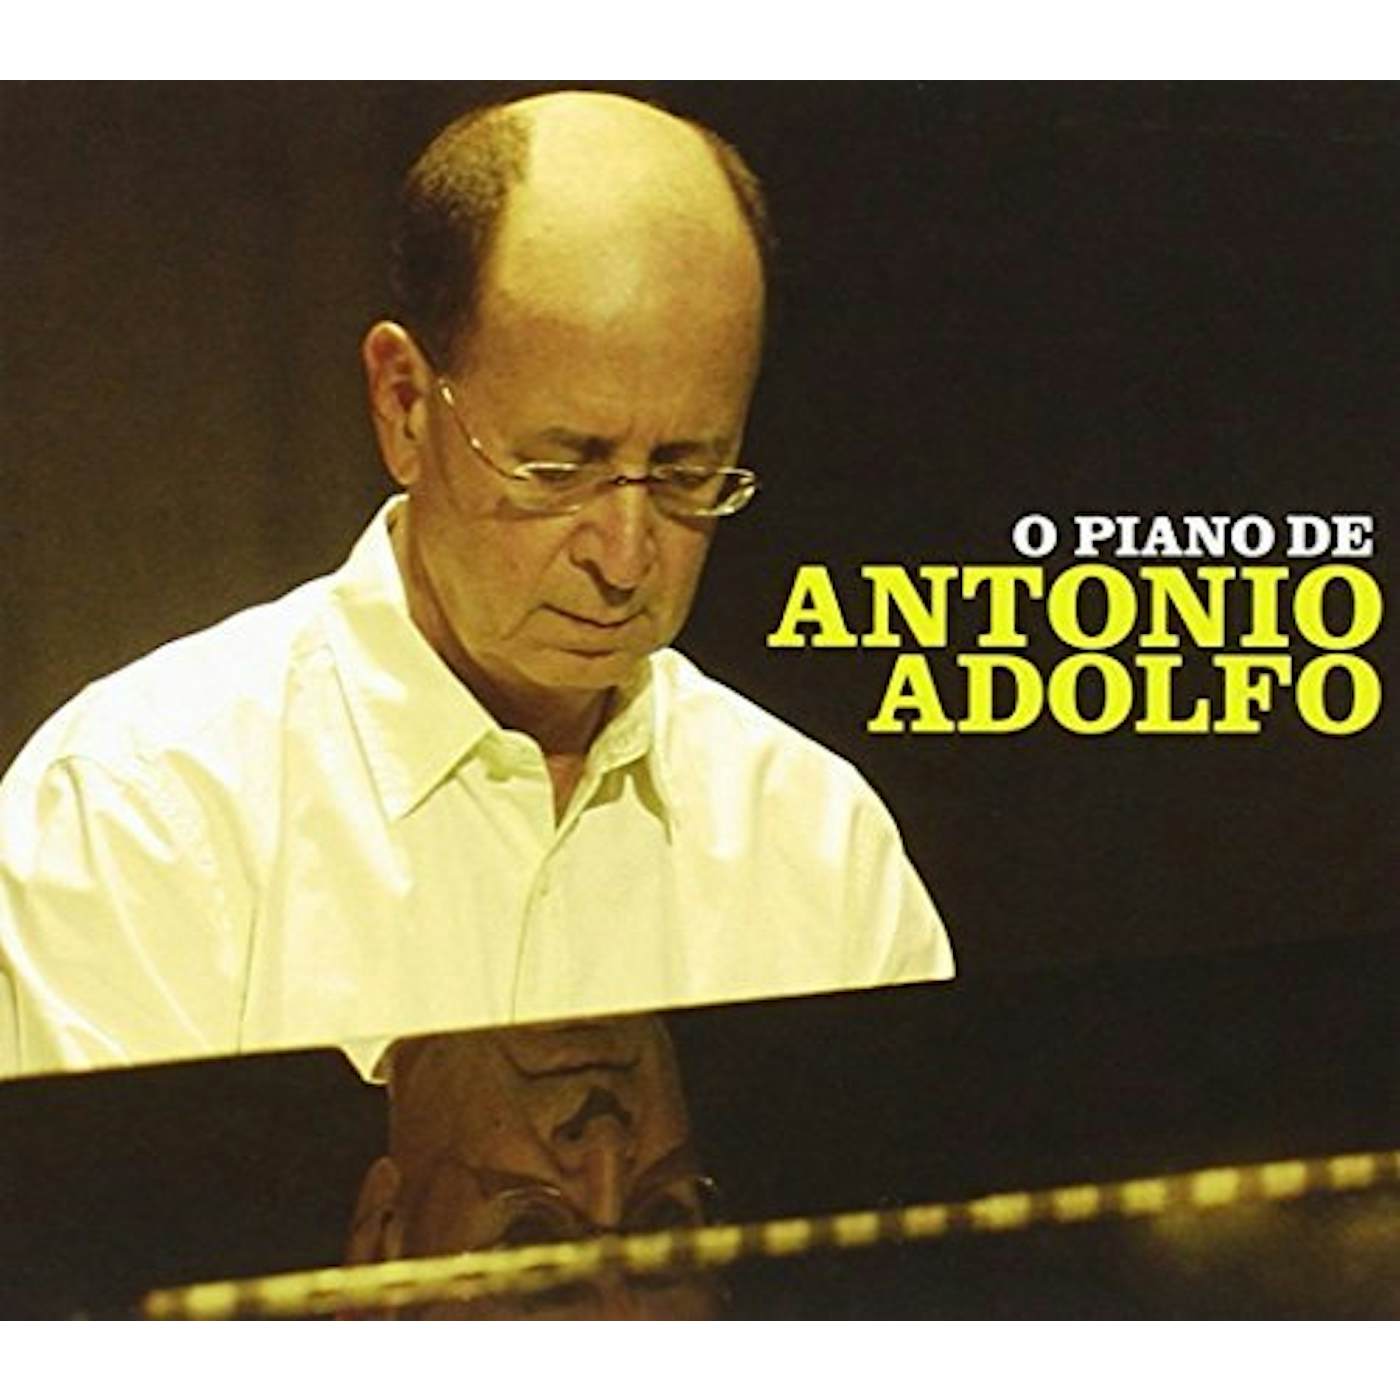 Antonio Adolfo O PIANO DE CD